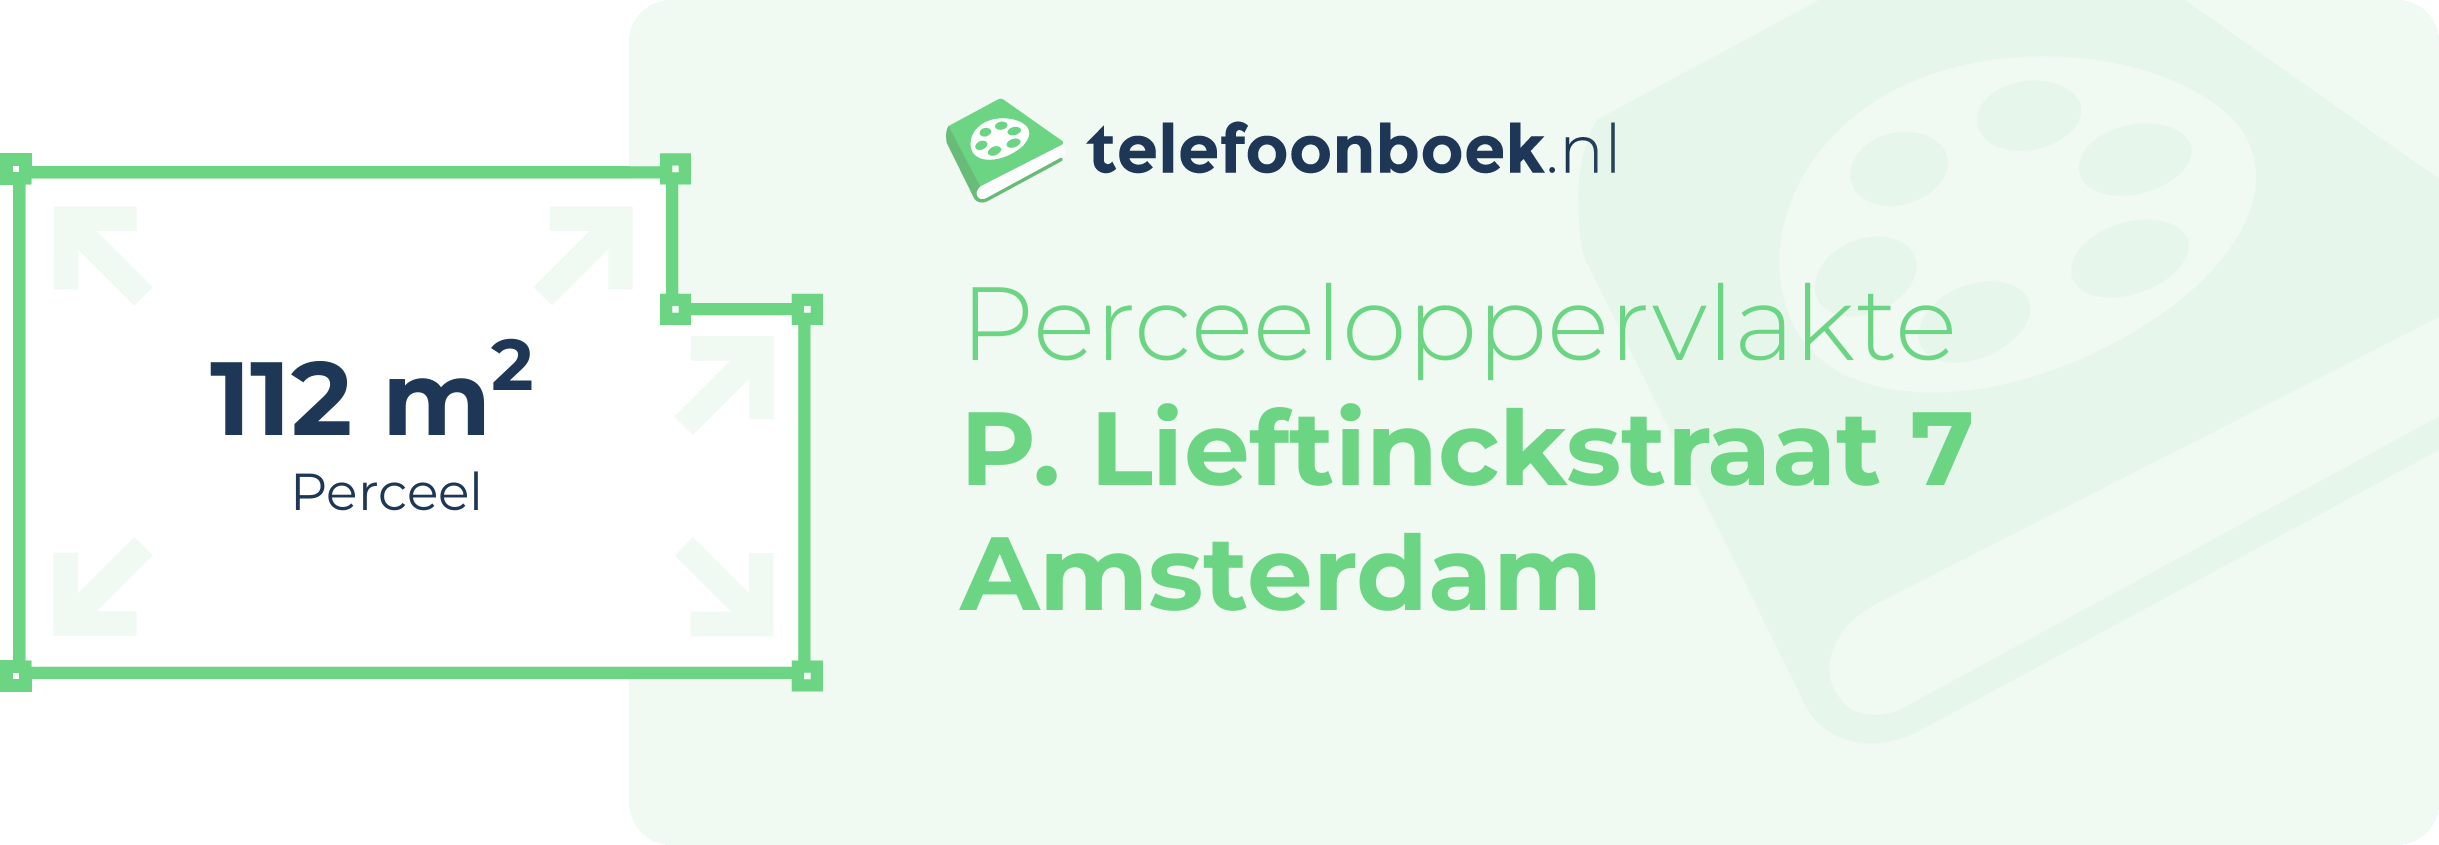 Perceeloppervlakte P. Lieftinckstraat 7 Amsterdam